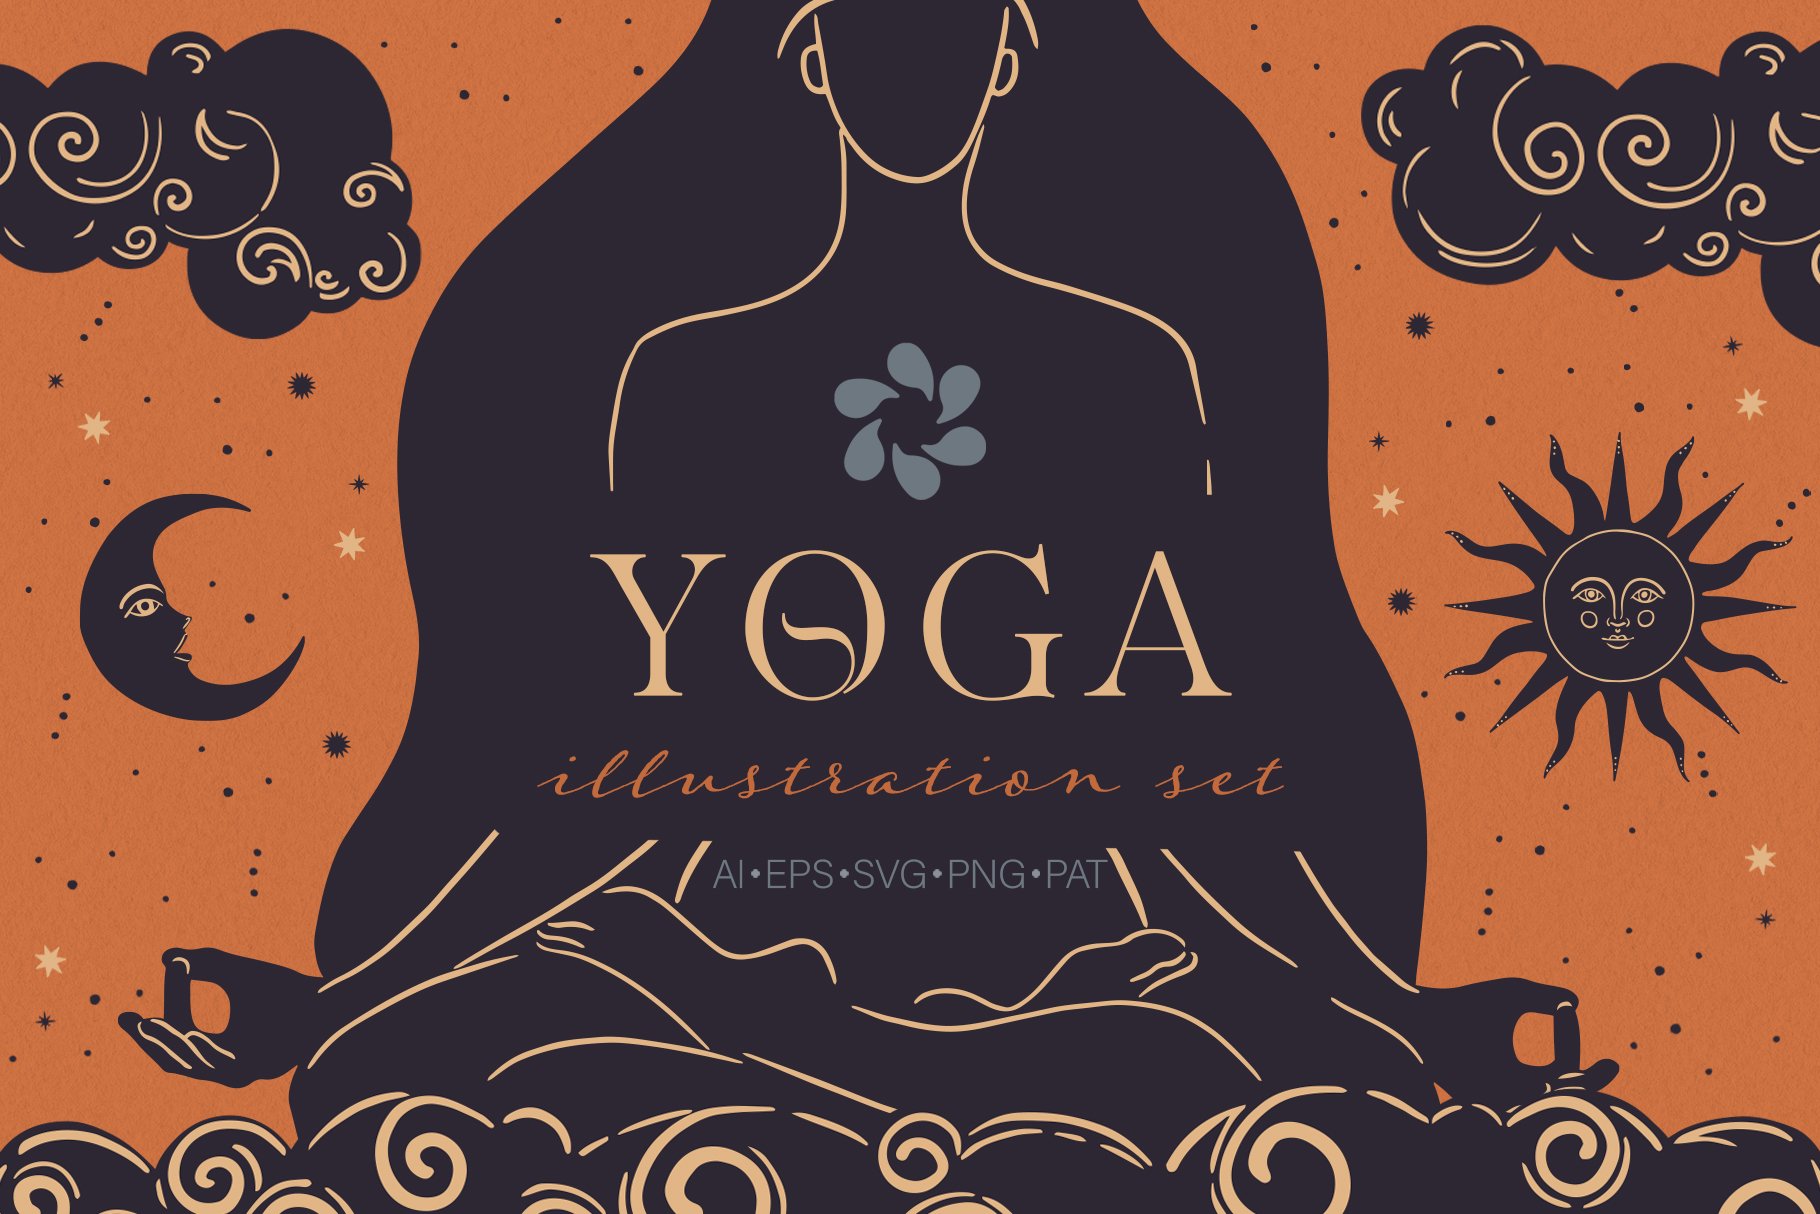 Yoga illustration vector set cover image.